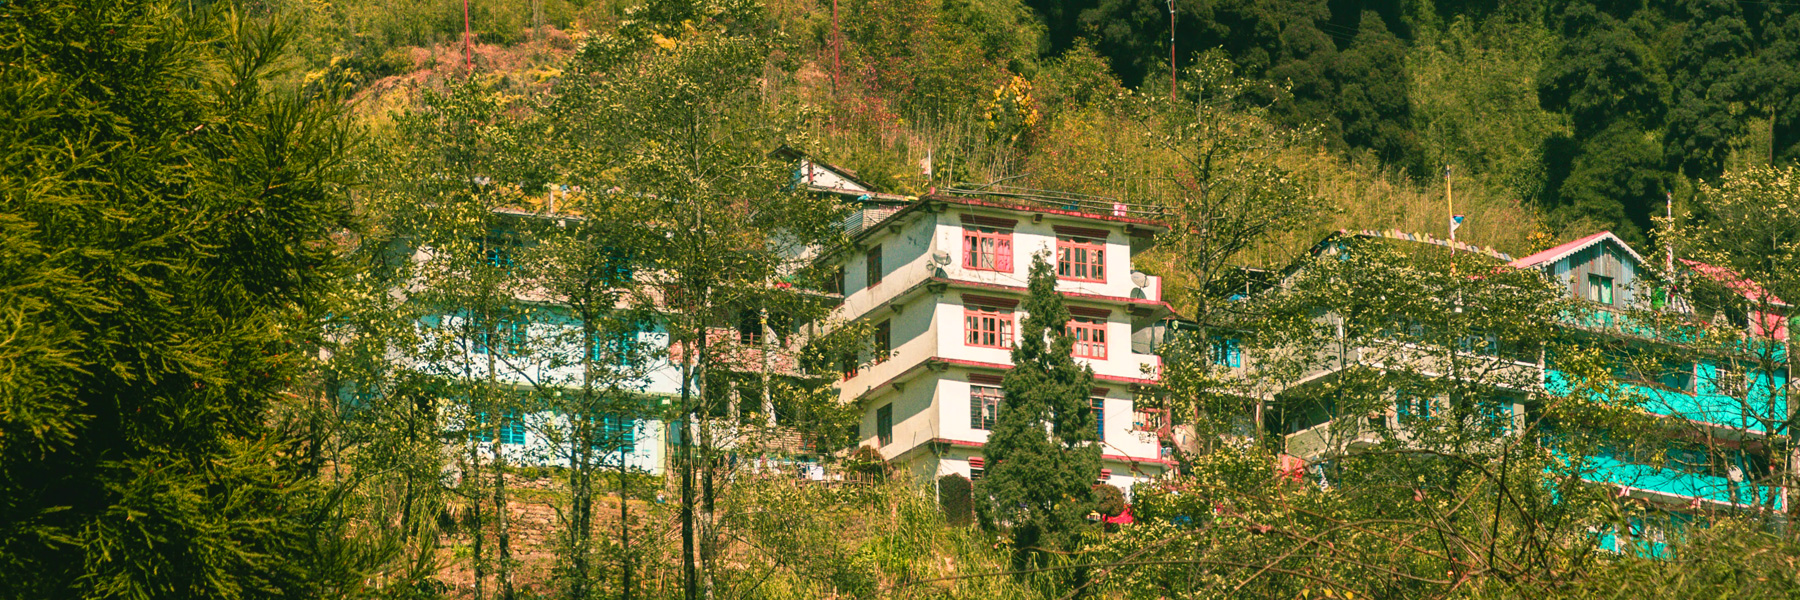 darjeeling village nepal inde